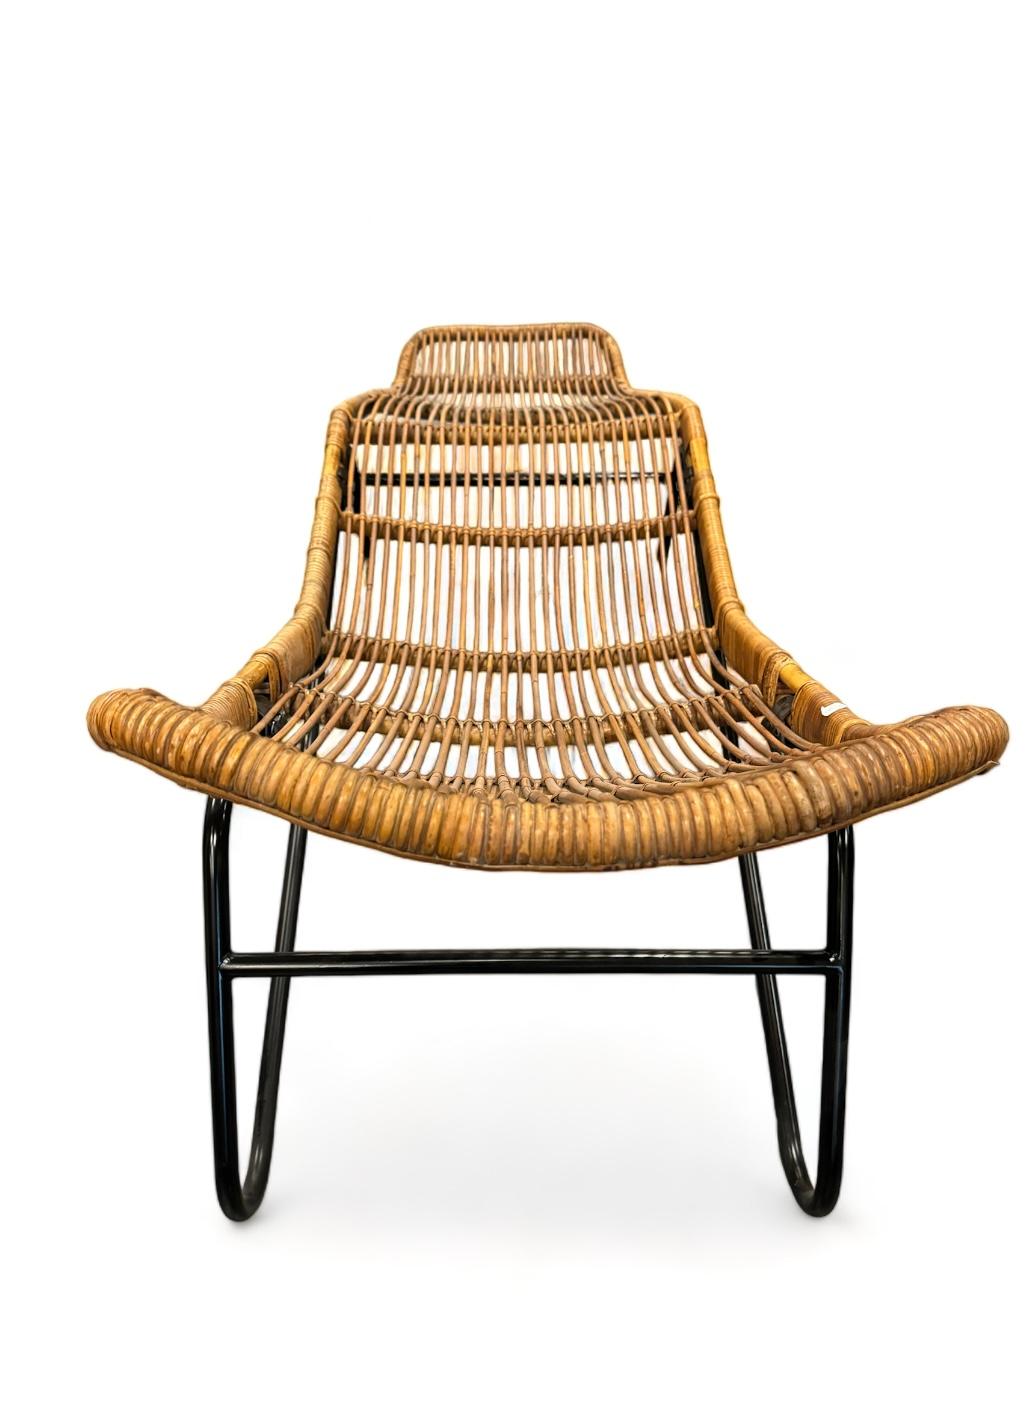 Wicker and metal  Lounge Chair by Dirk Van Sliedrecht Mid modern century  For Sale 1